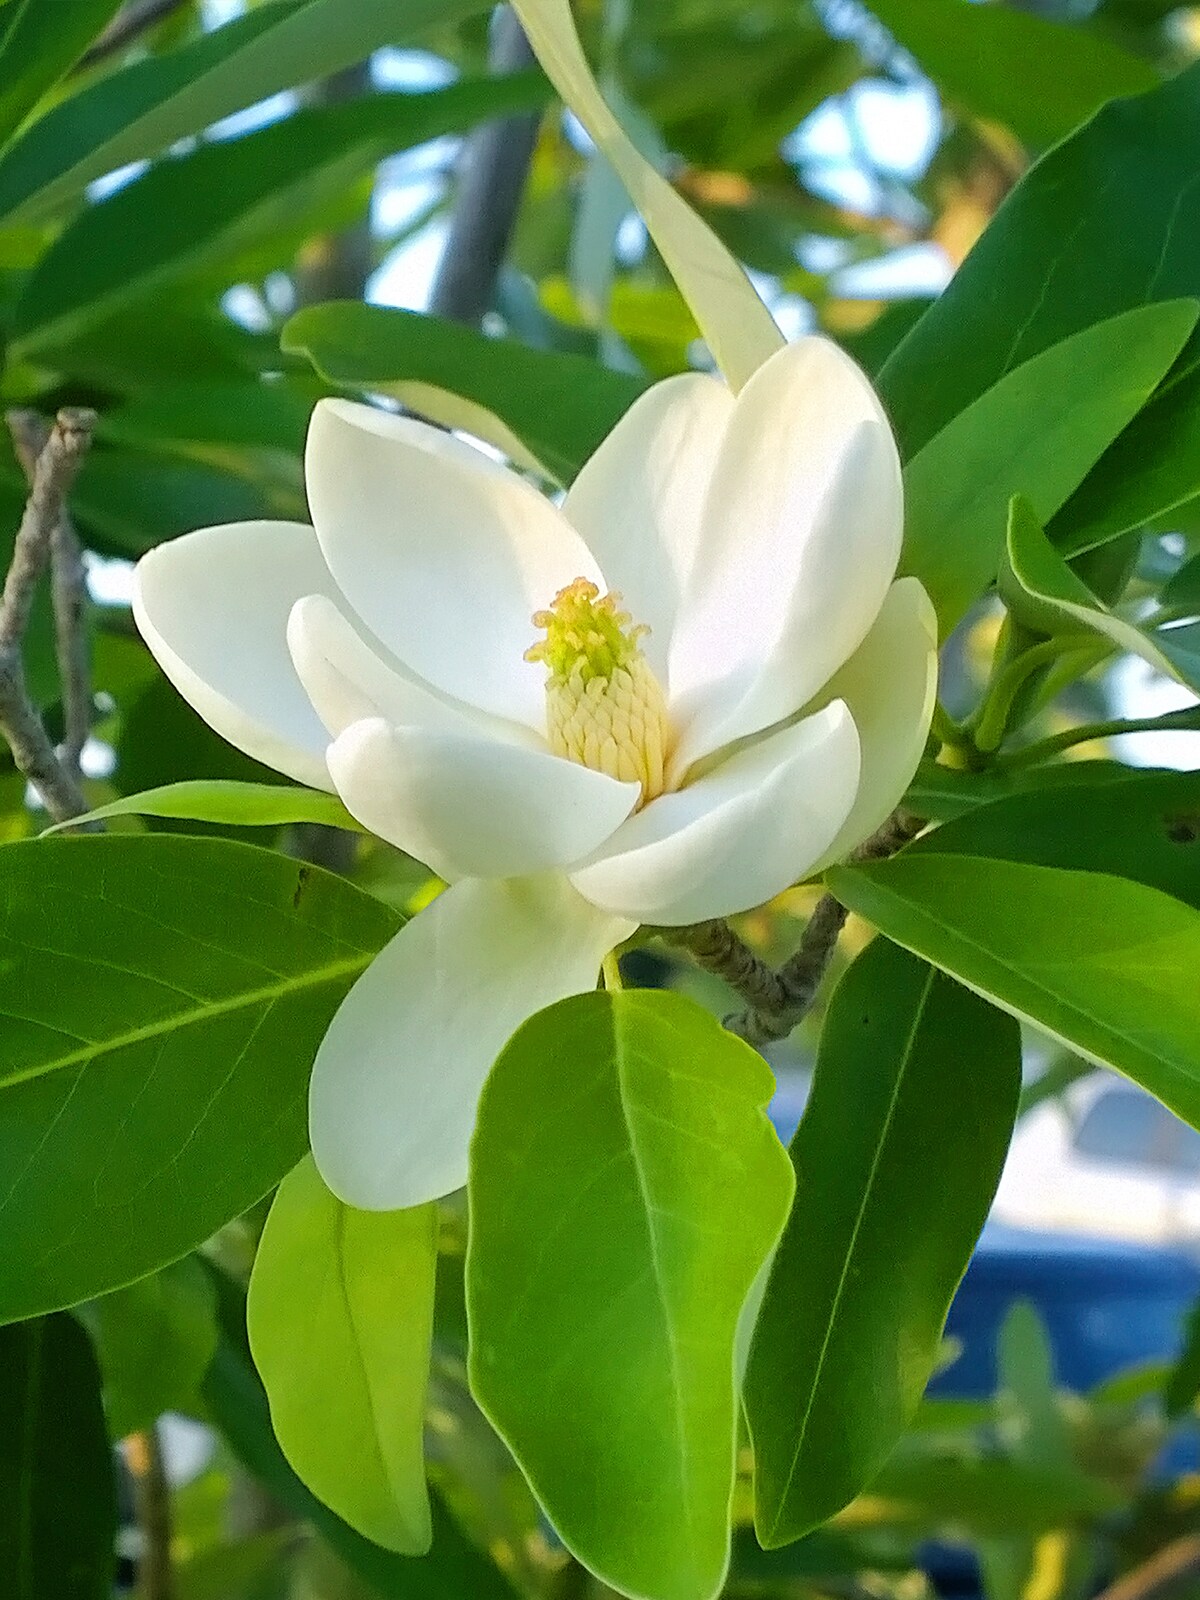 Magnolia Trees at 